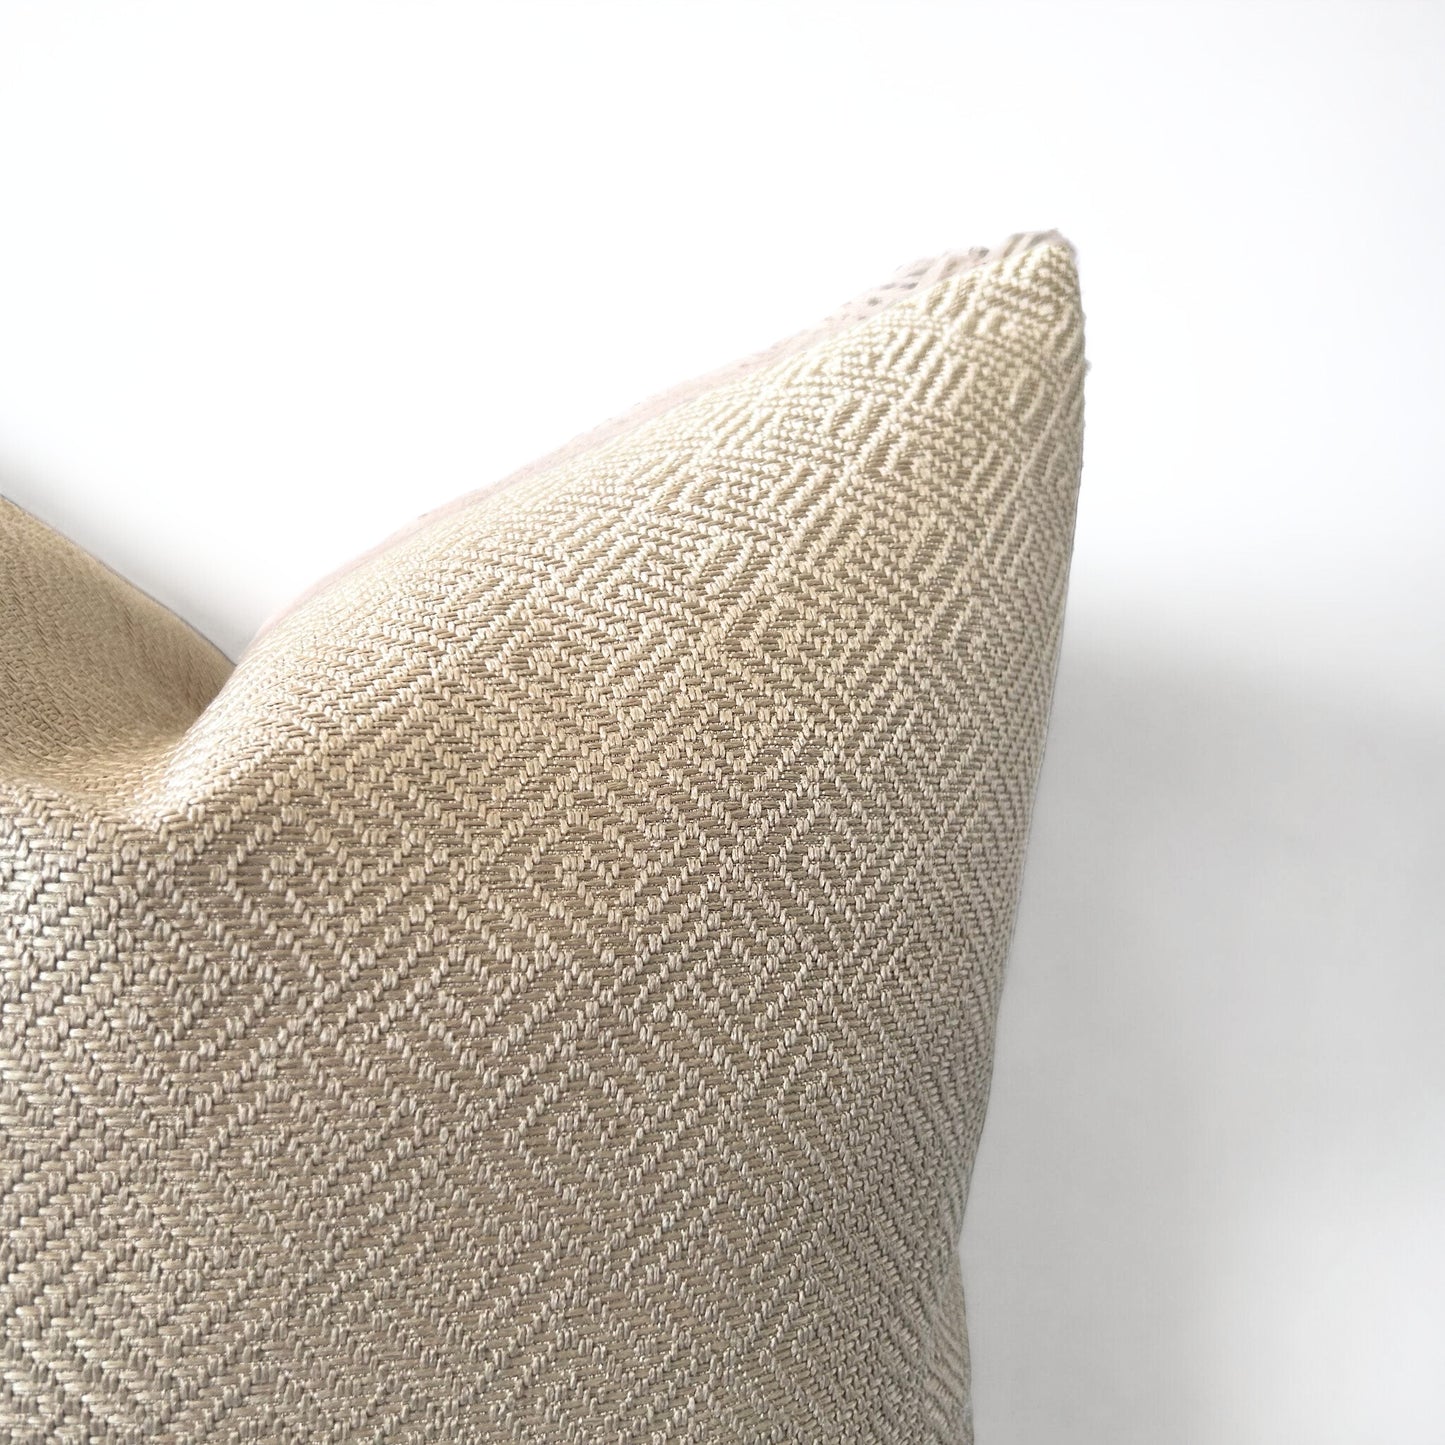 Elaborate Gold - Sustainable Décor Pillows